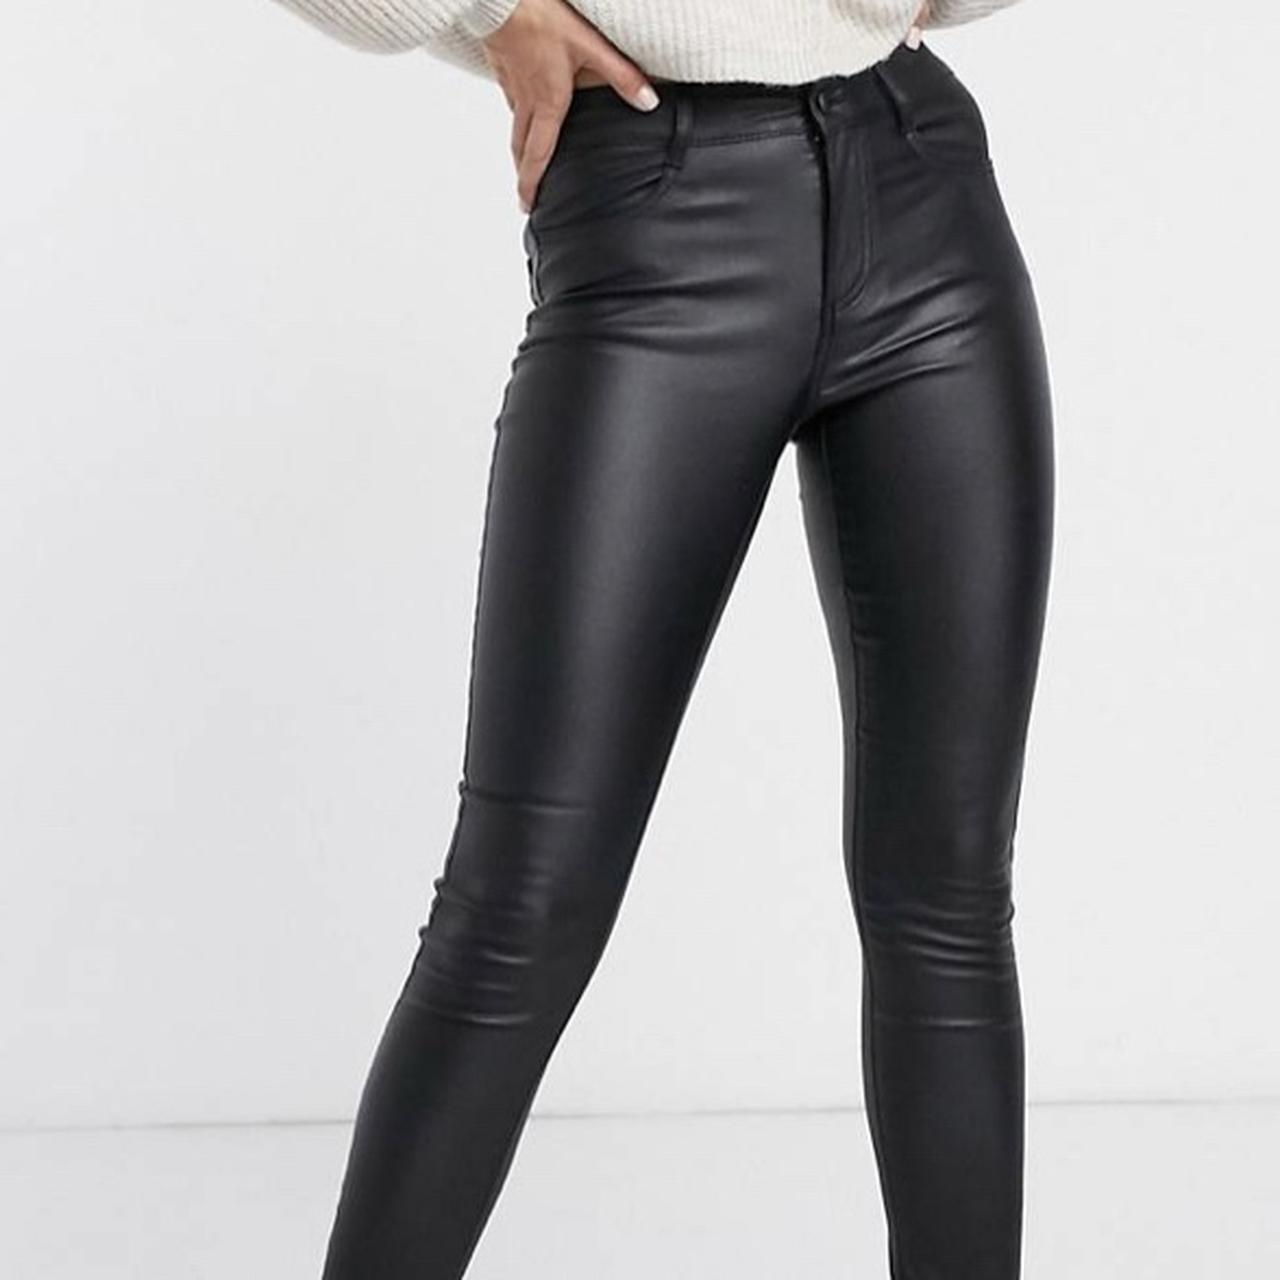 Skinny black coated jeans, leather look. A little... - Depop